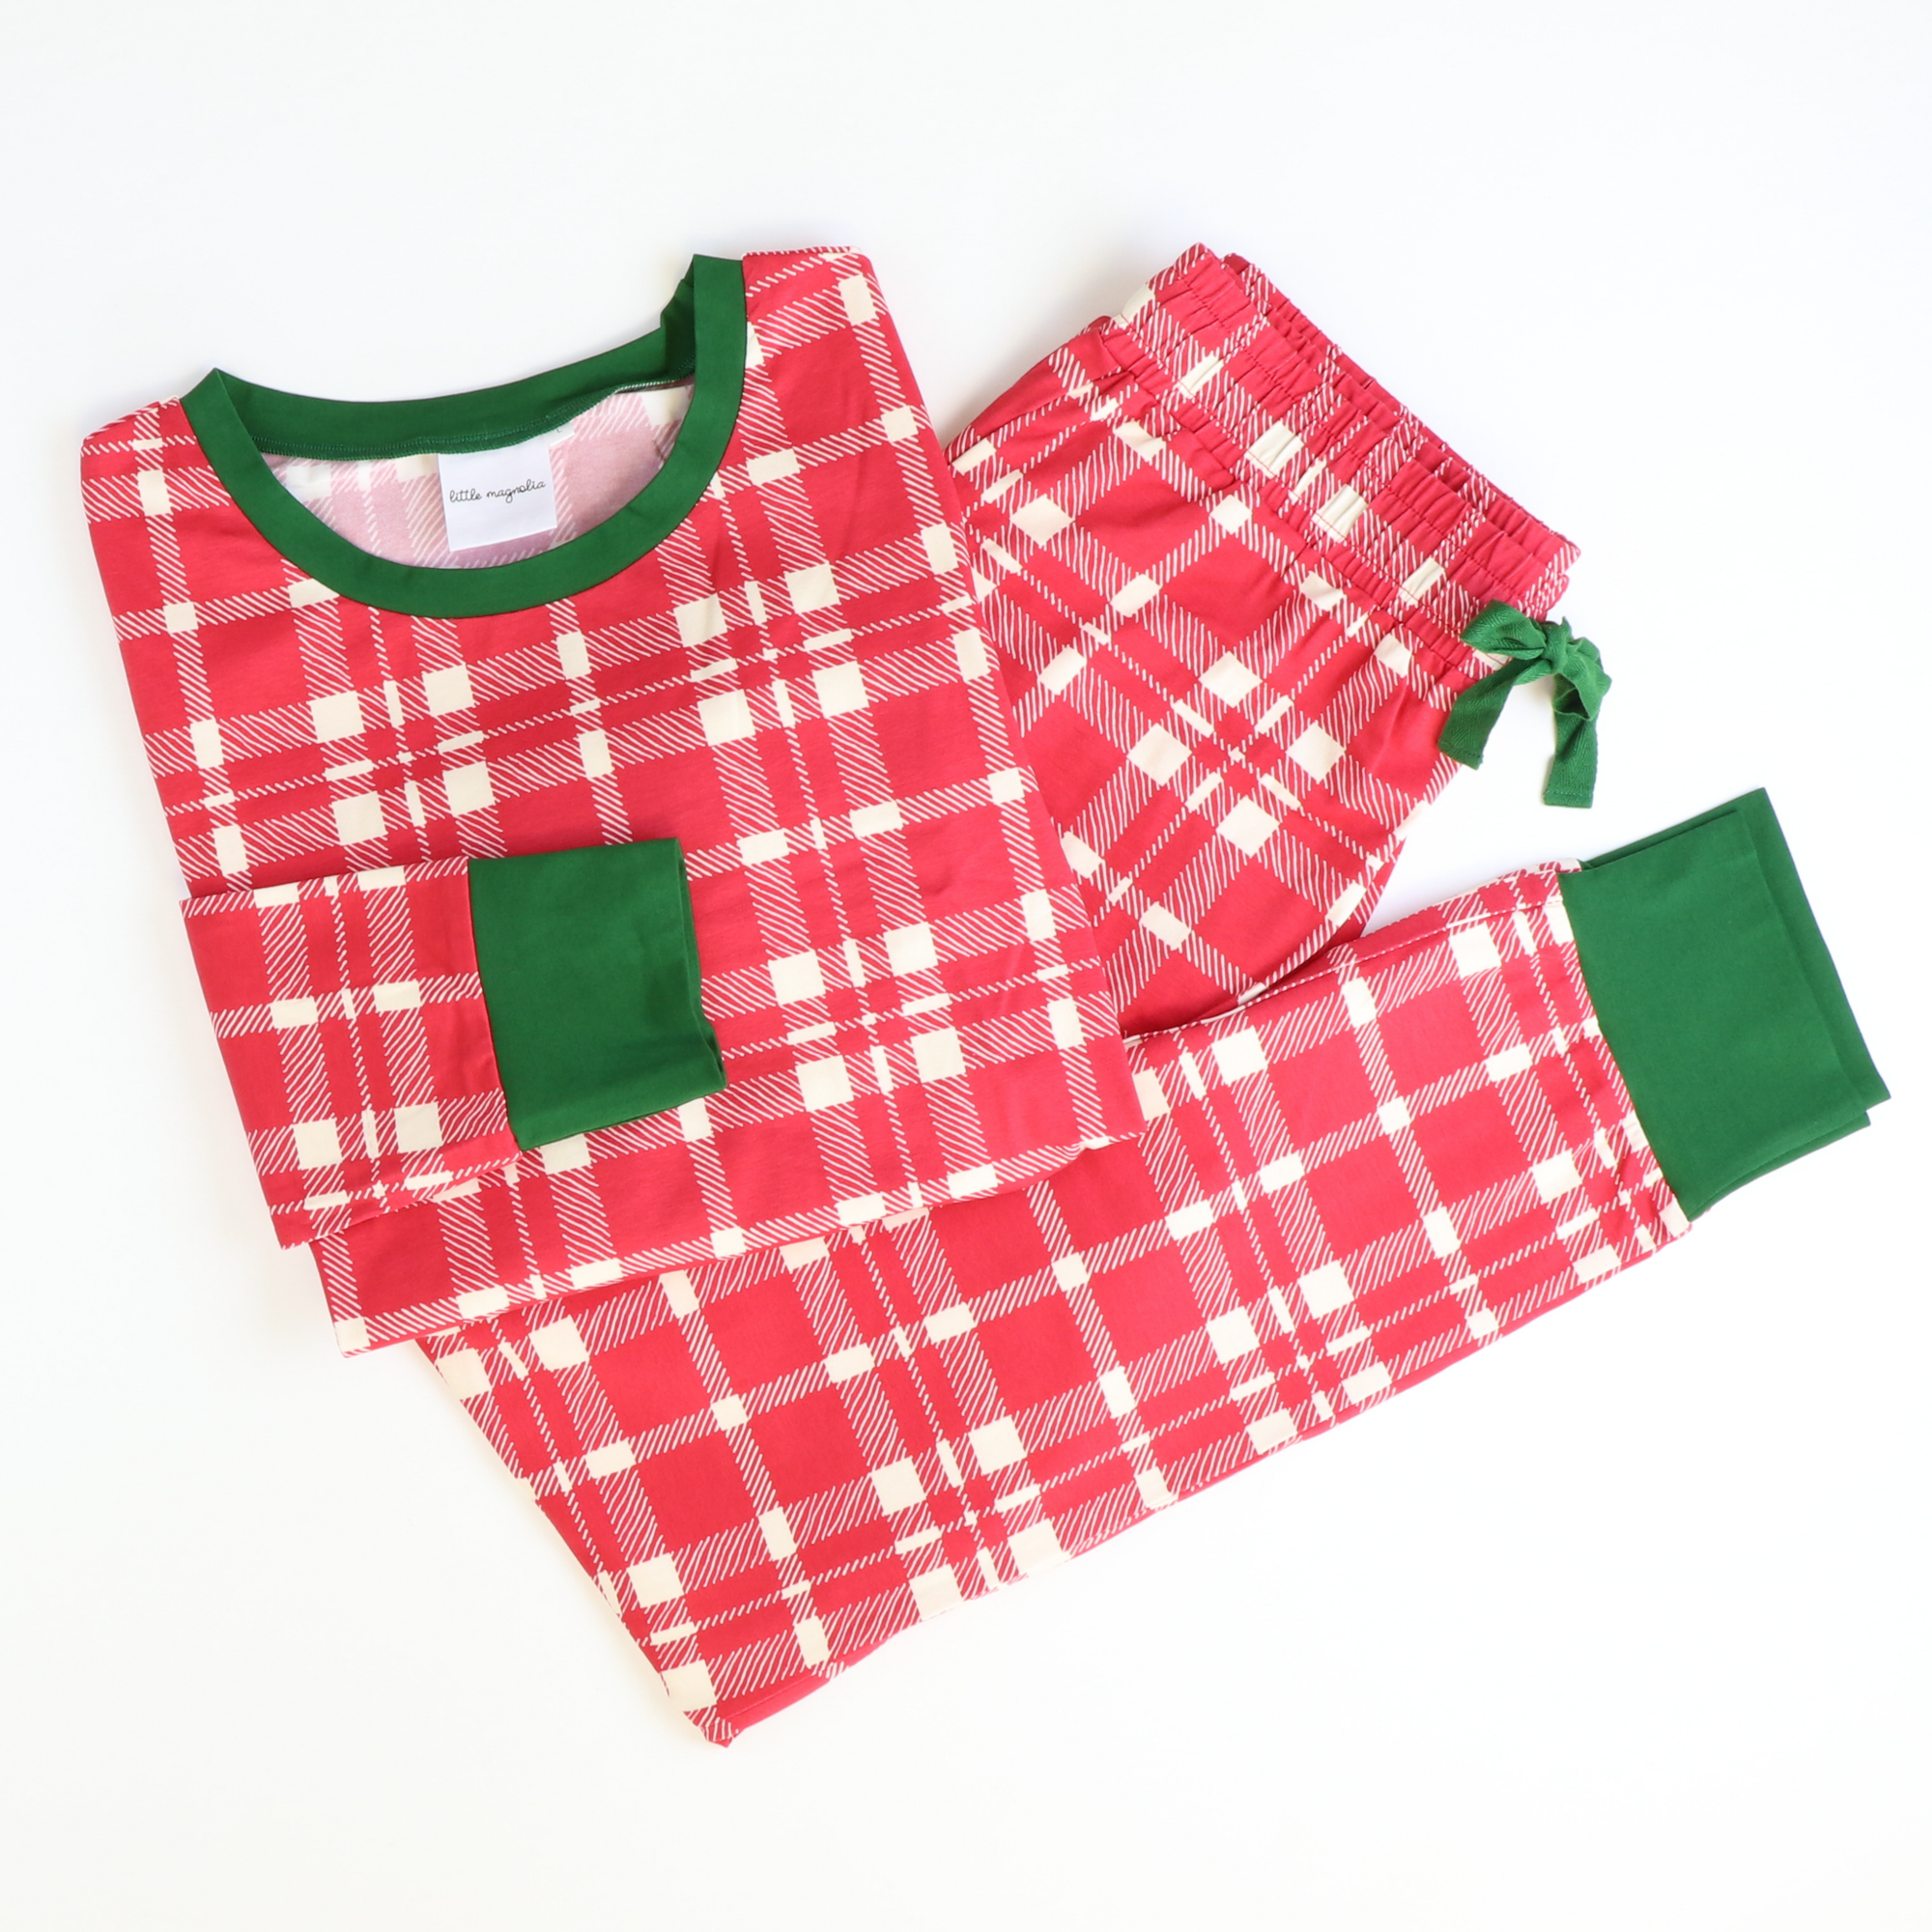 Women's Knit Pajama Set - Crimson Plaid - Southern Smocked Co.